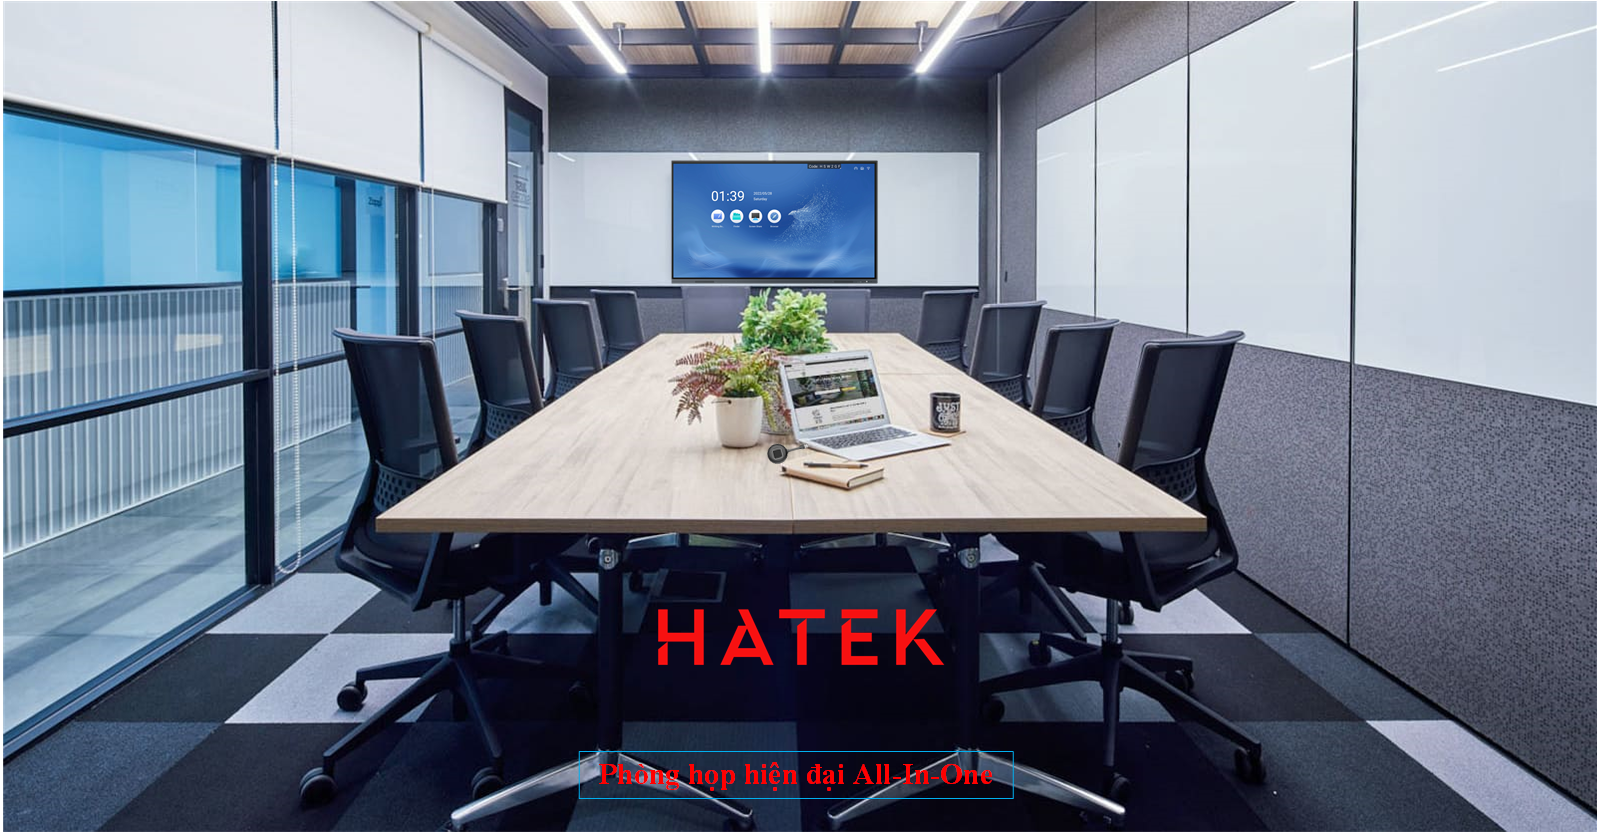 Hatek - Phòng họp hiện đại All in One